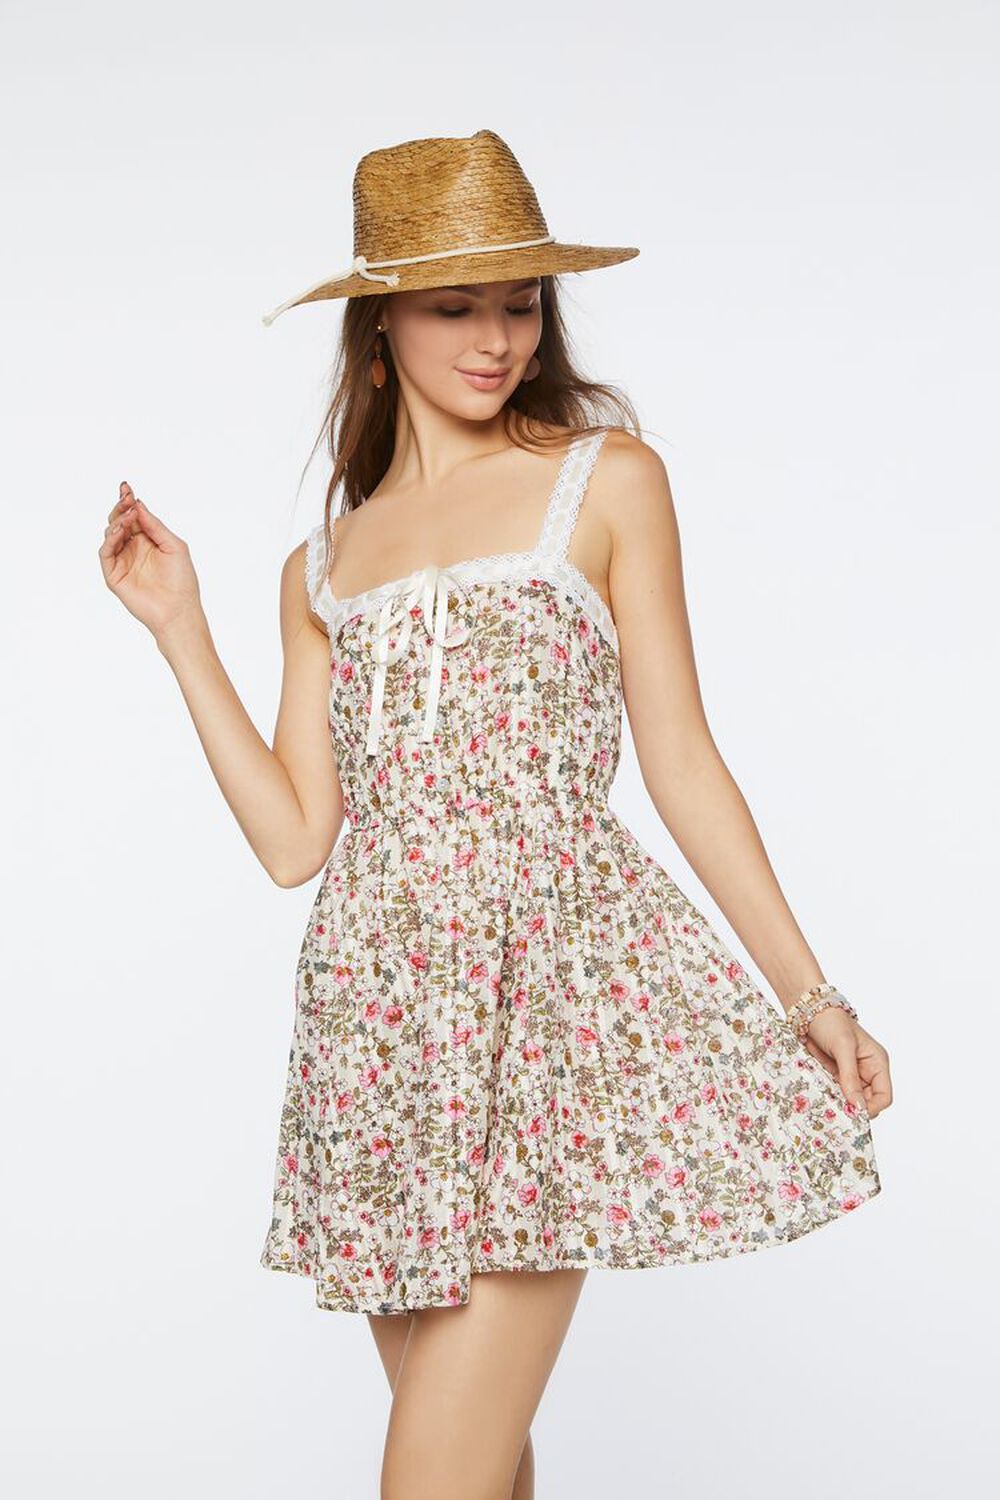 GREY/MULTI Floral Print Bow Dress, image 1